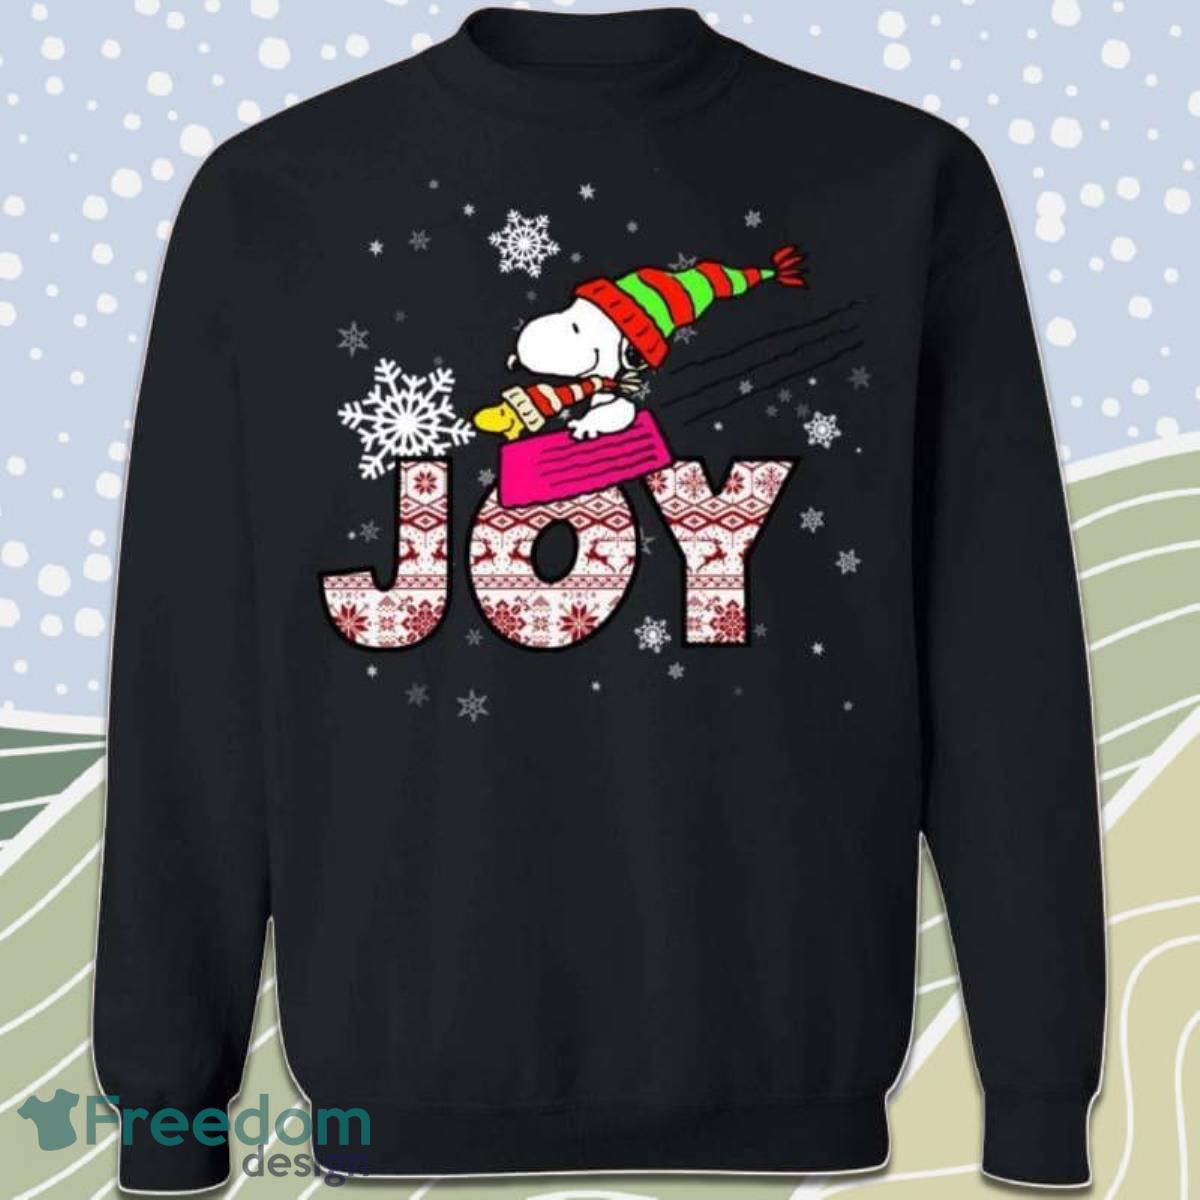 Snoopy Christmas Joy Sweatshirt Peanuts Christmas Shirt Product Photo 1